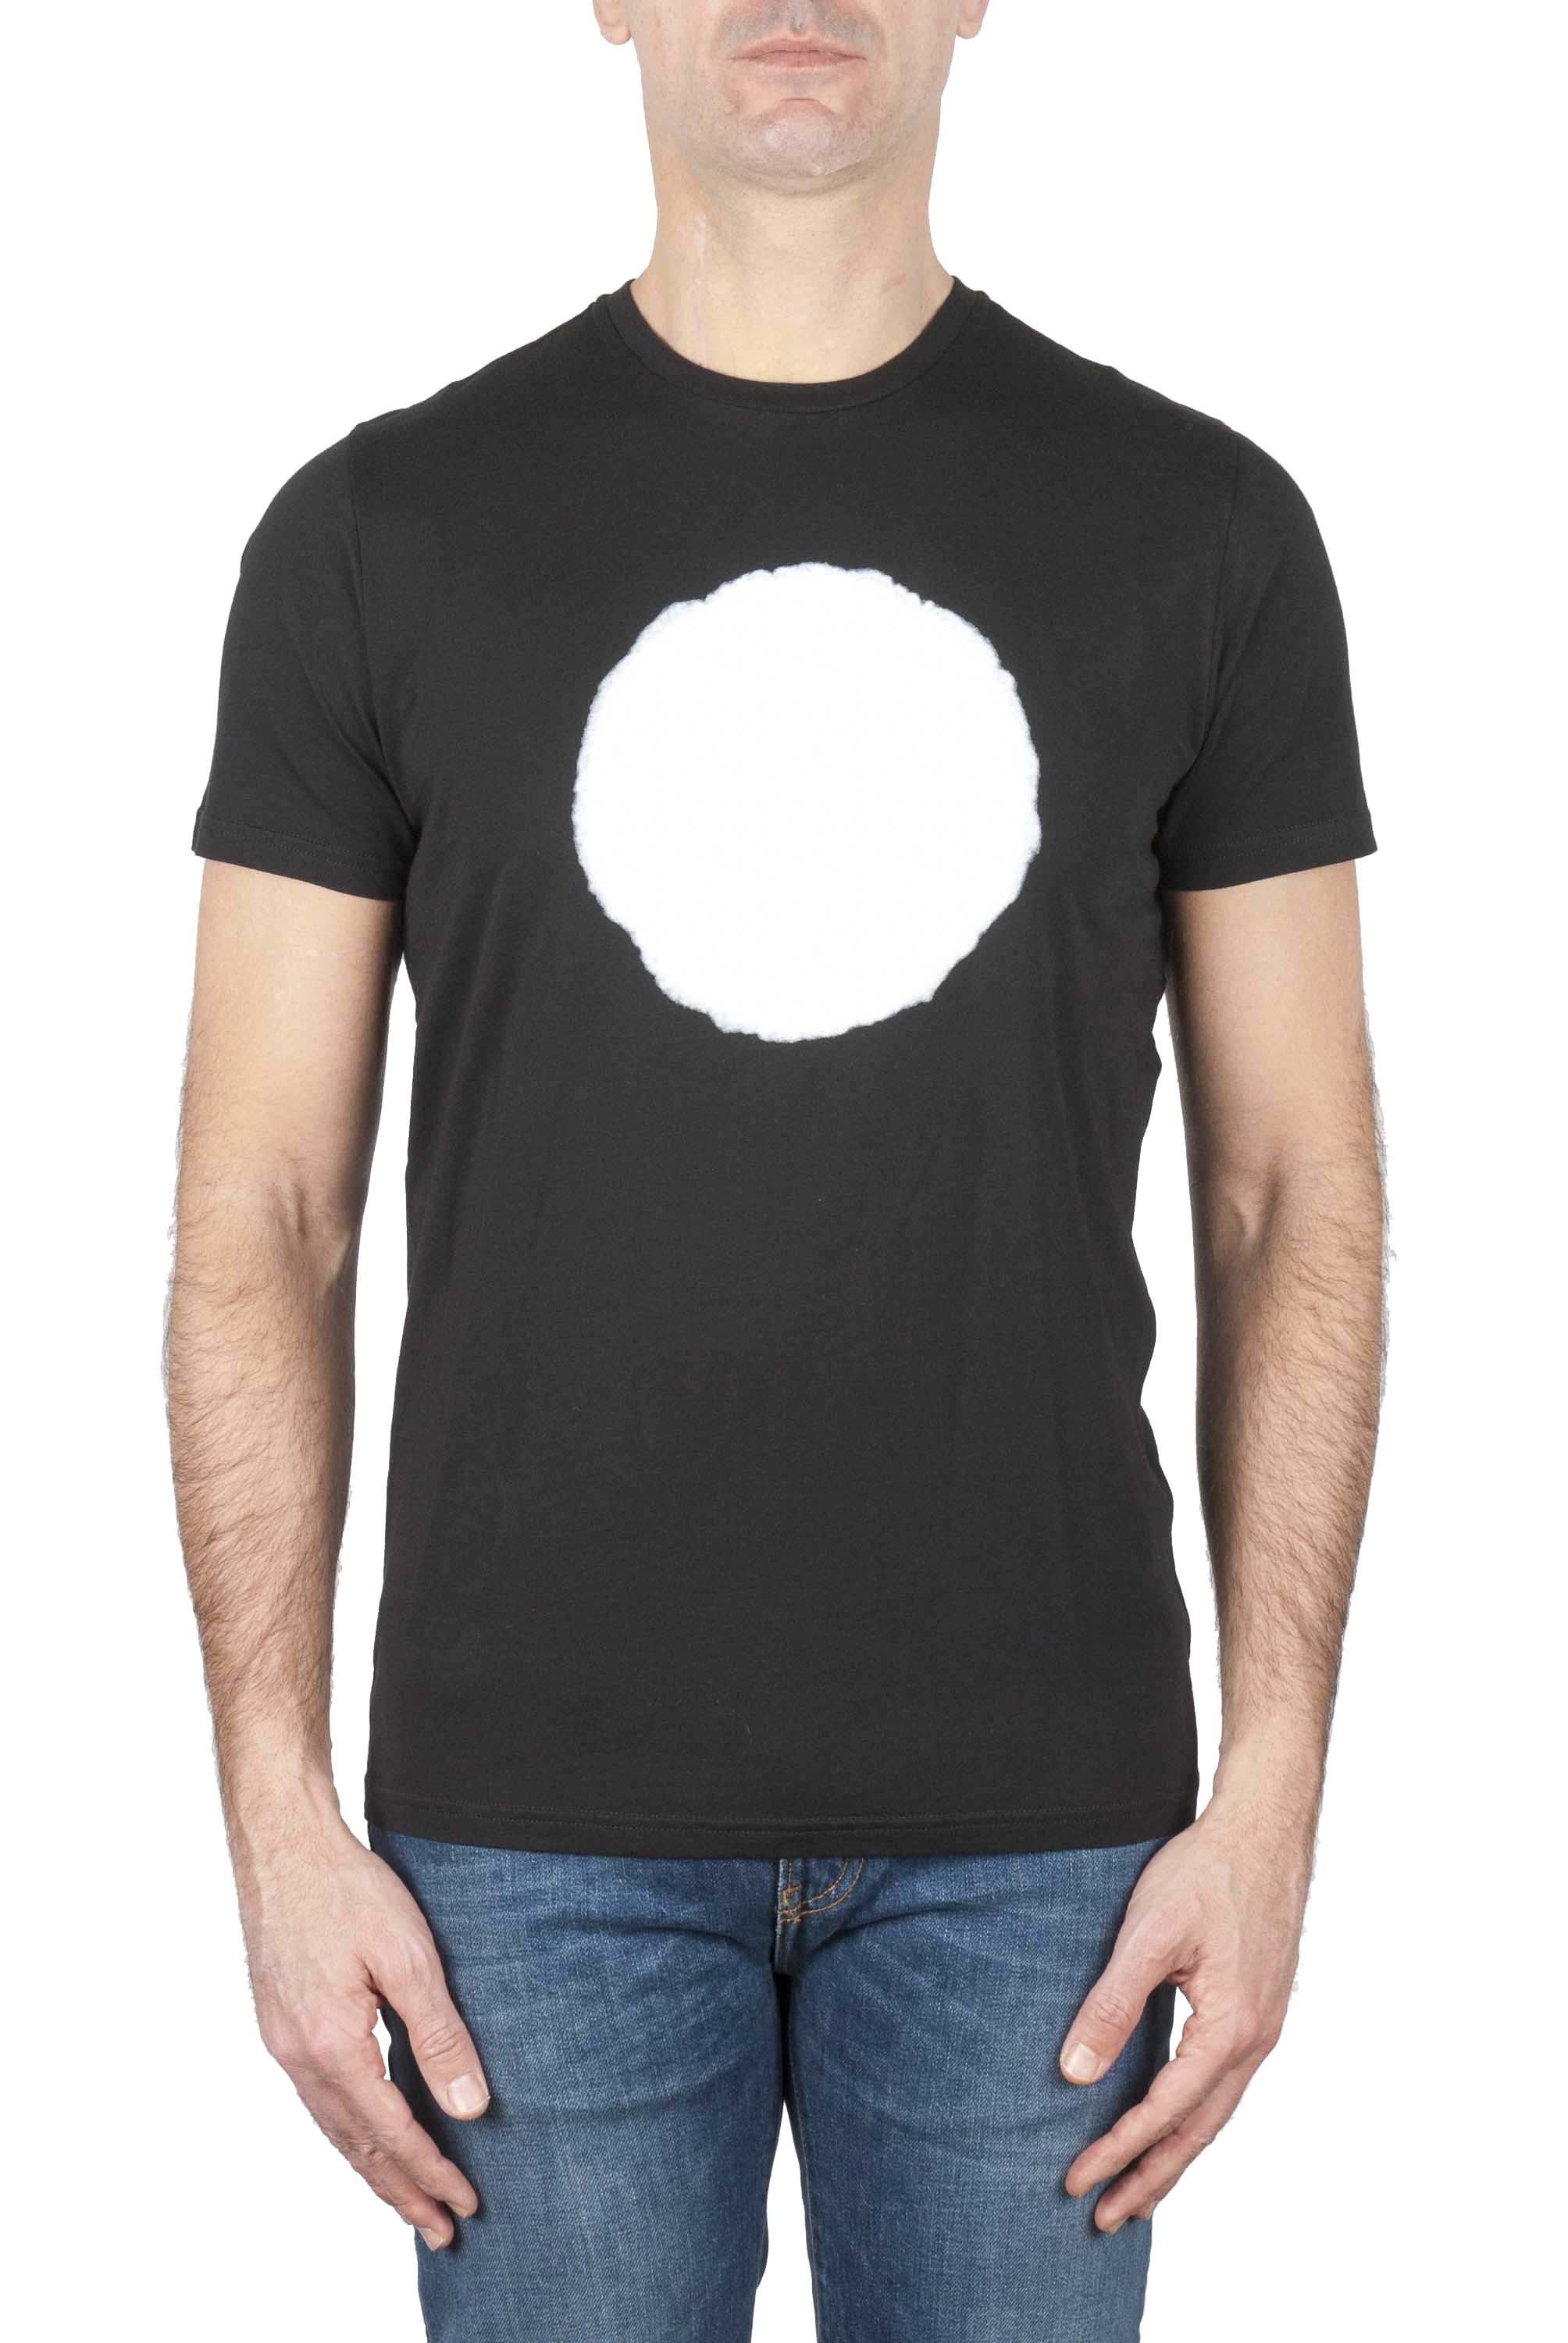 SBU 01166 白と黒のプリントされたグラフィックの古典的な半袖綿ラウンドネックtシャツ 01